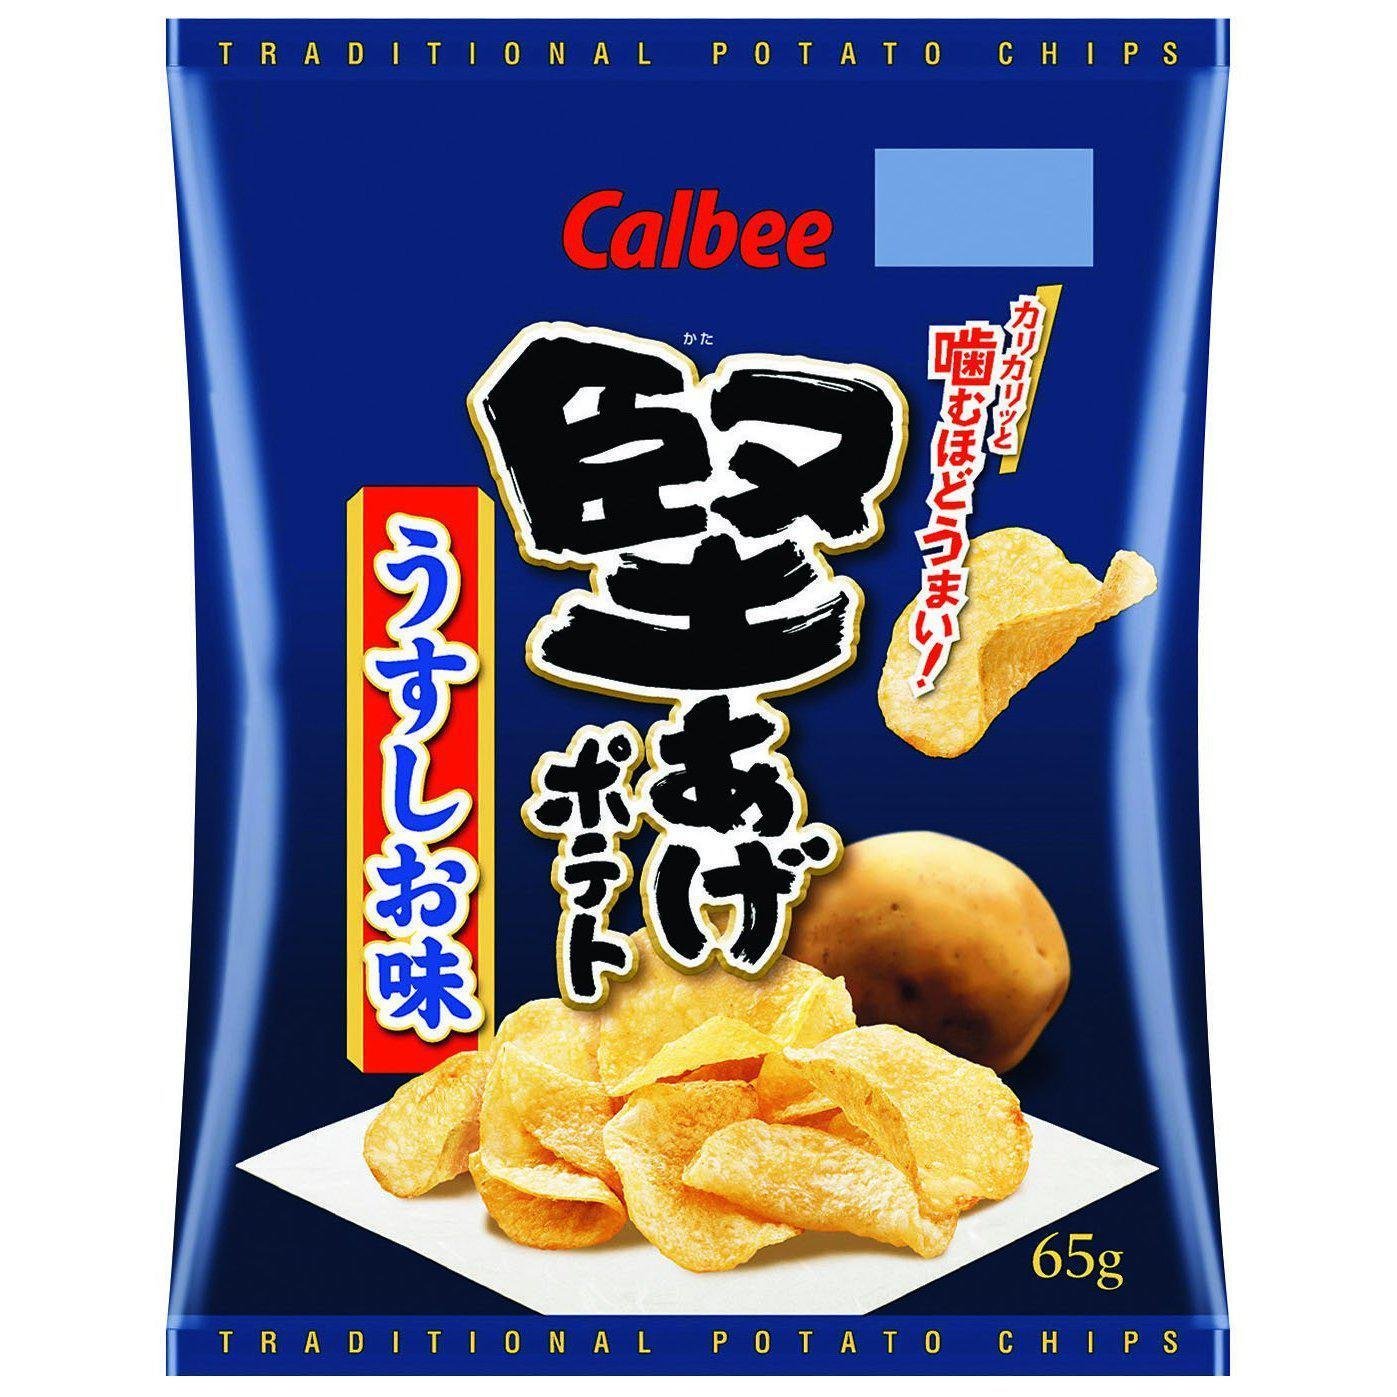 P-1-CALB-SALCHP-1:12-Calbee Kataage Lightly Salted Crispy Potato Chips 65g (Box of 12 Bags).jpg